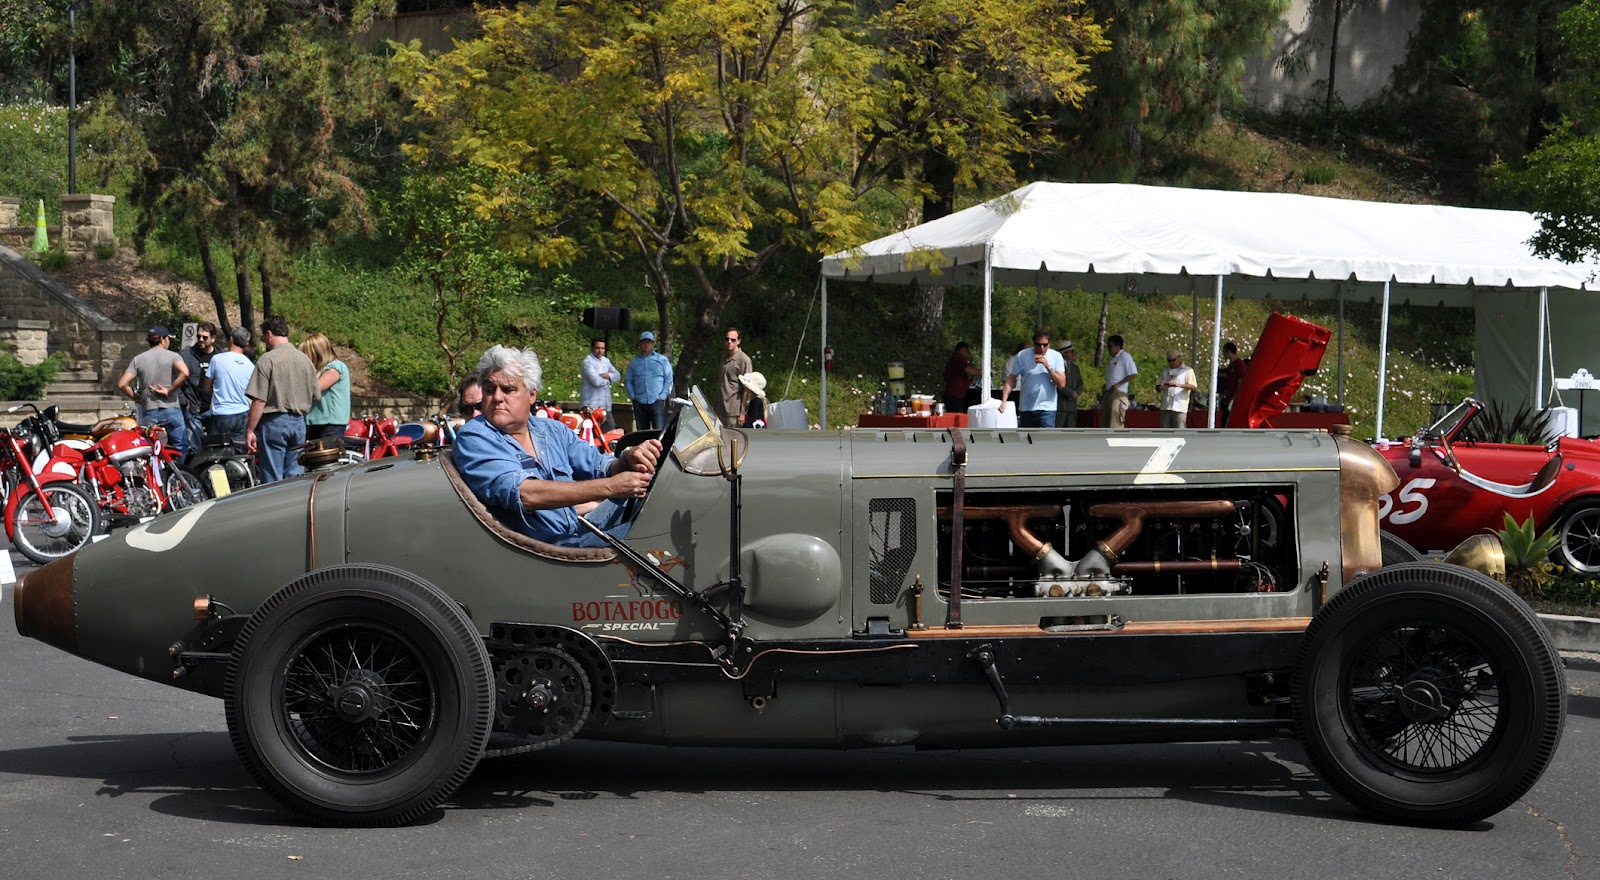 botafogo-special-1917-race-car.jpg